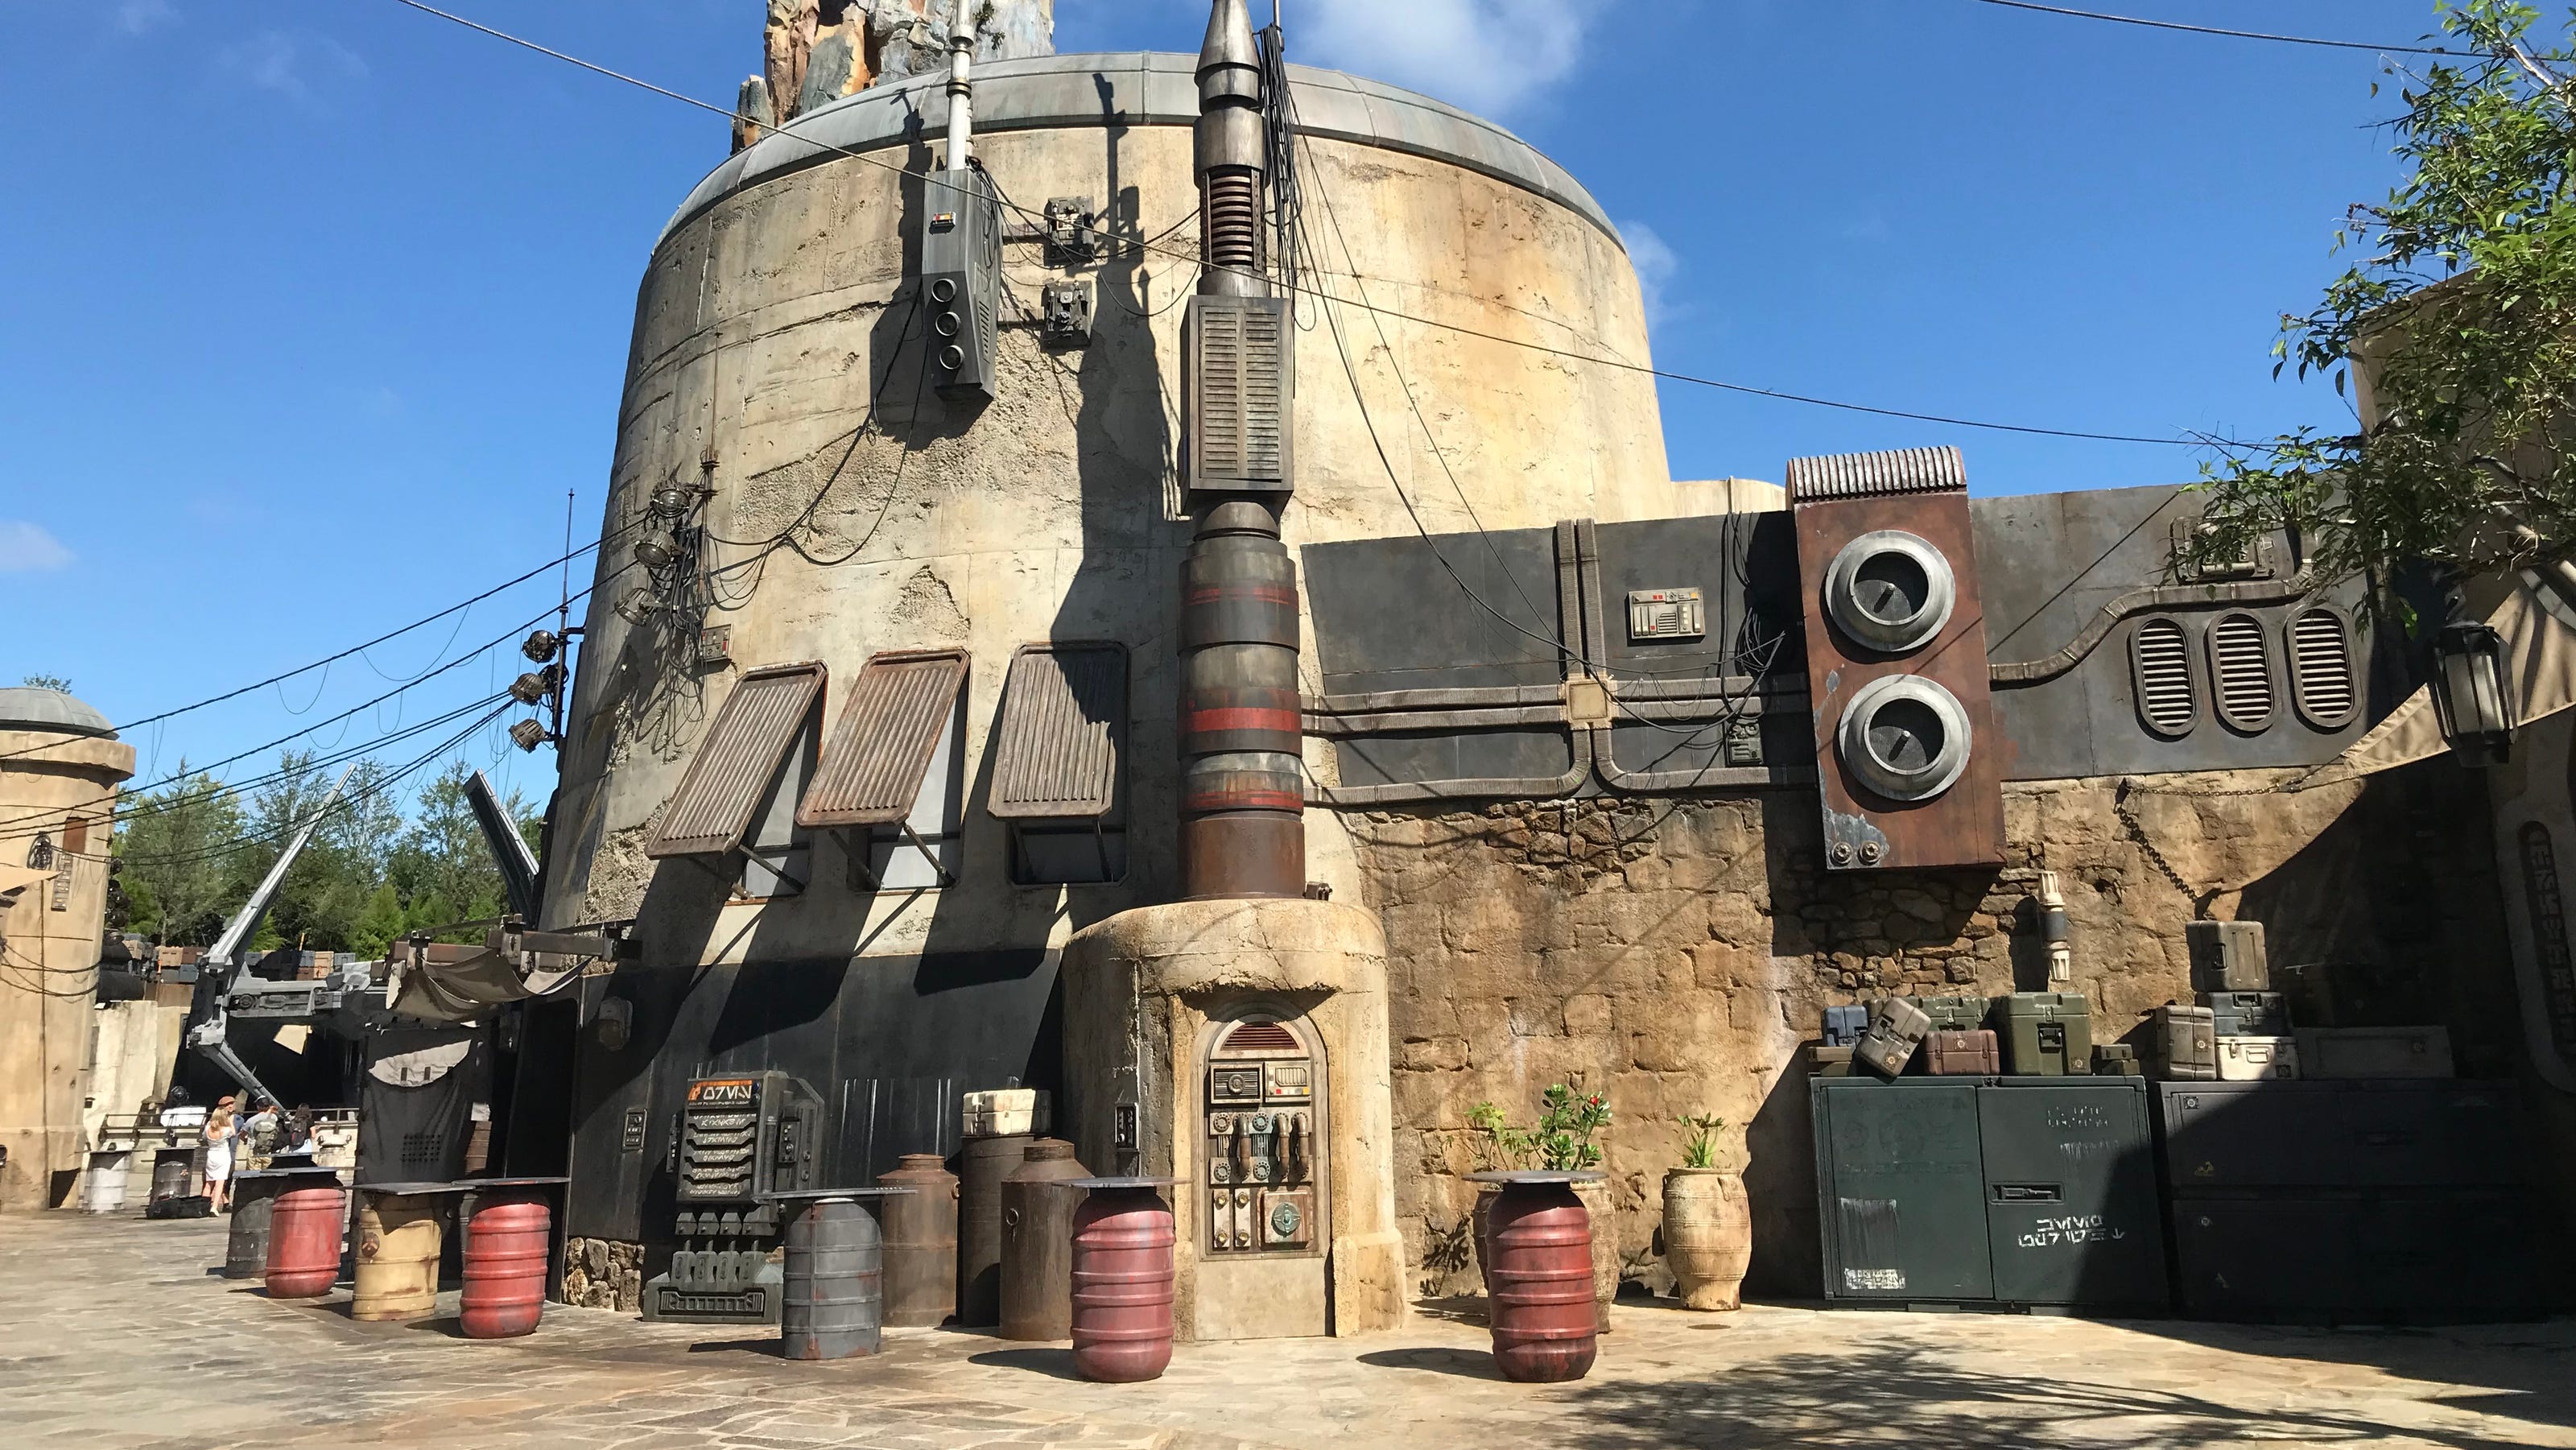 Disney Star Wars land: Orlando opens at Hollywood Studios